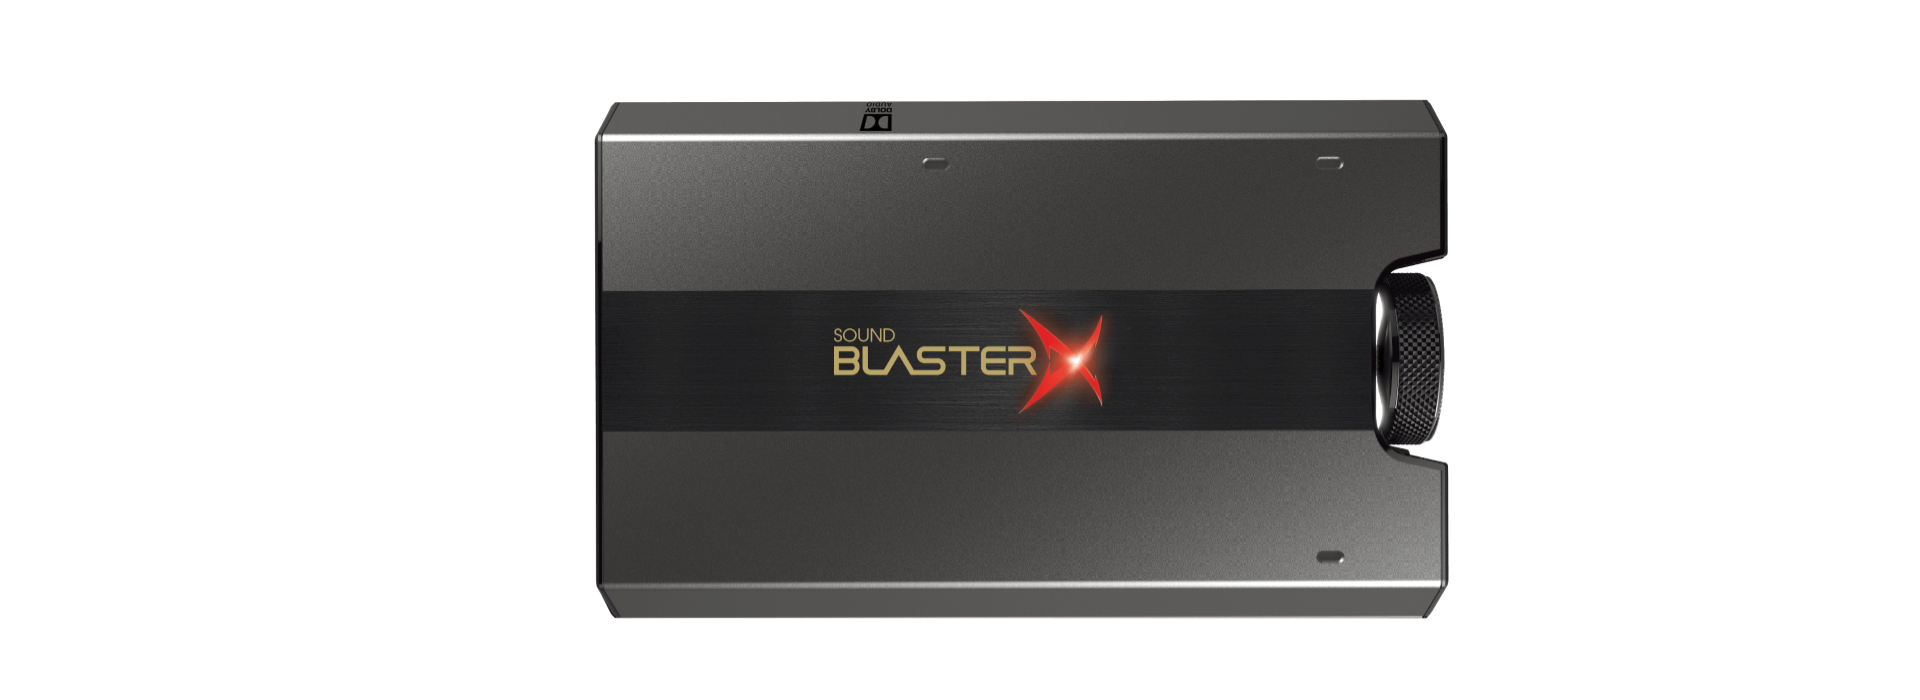 Creative Sound BlasterX G6 Review - Audiophile inside a gamer body